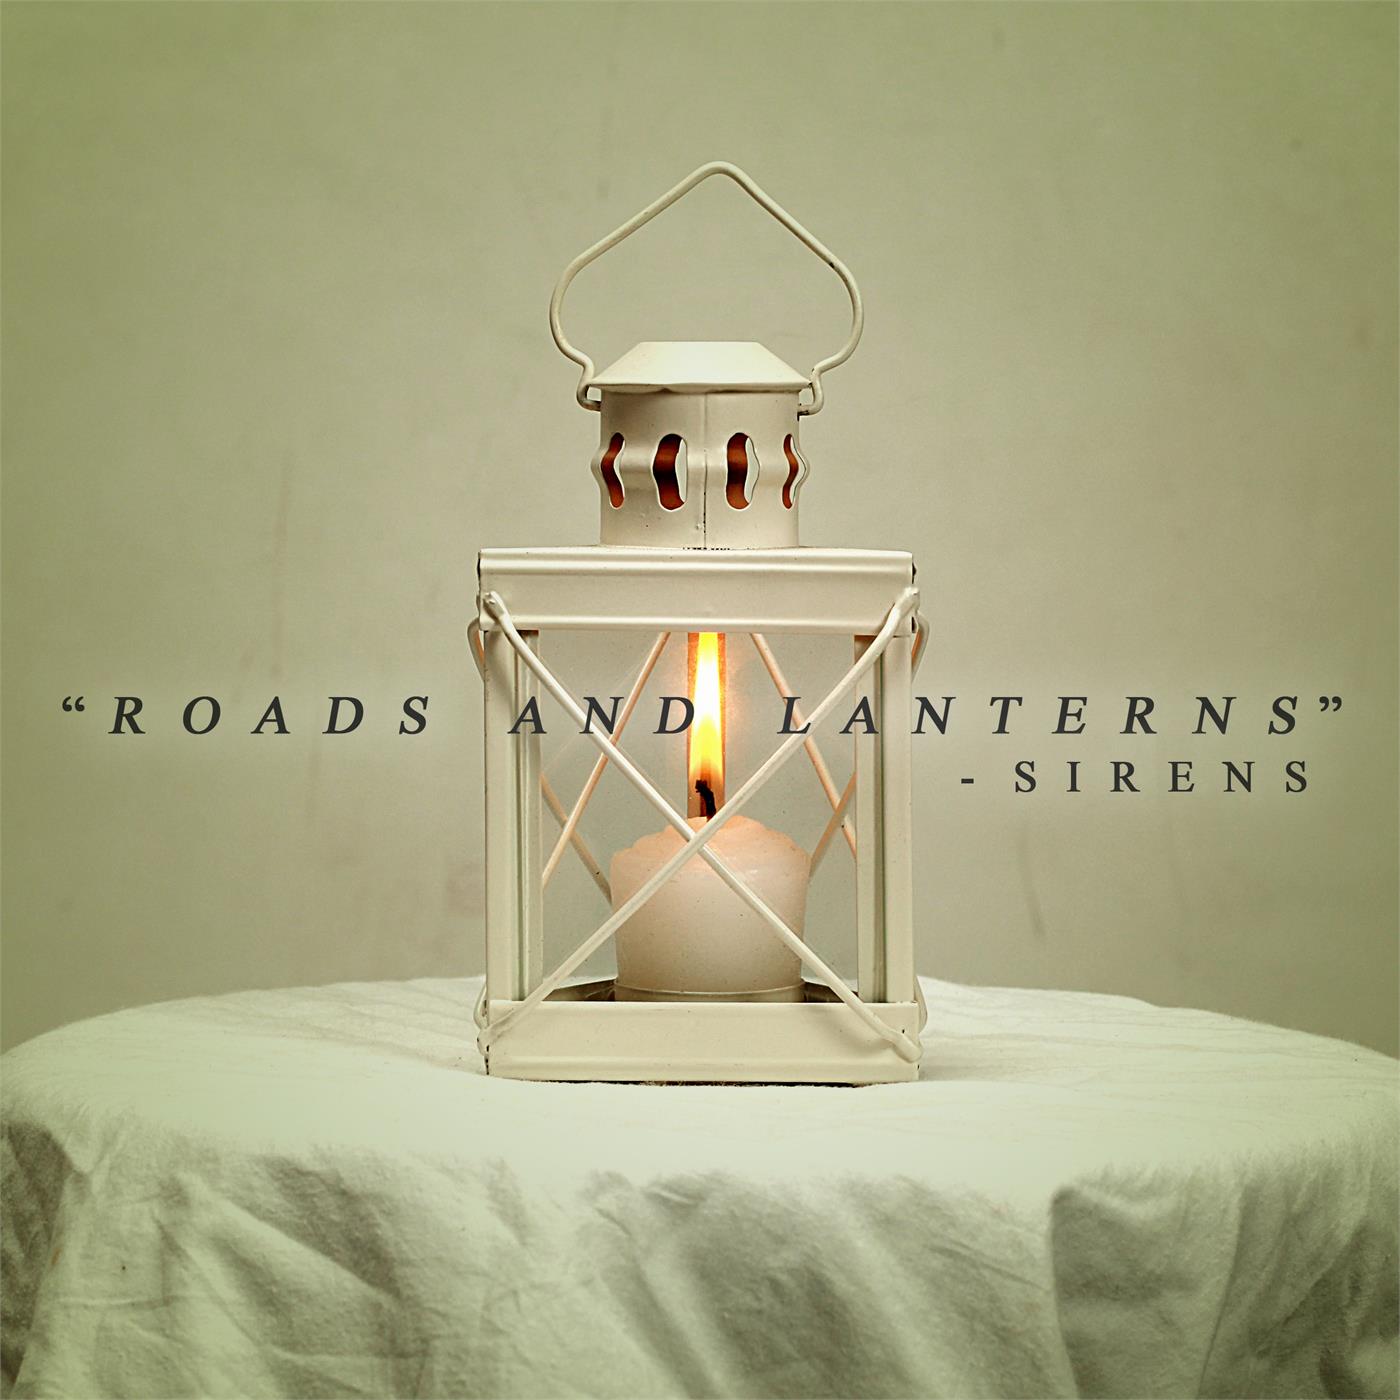 Roads and Lanterns